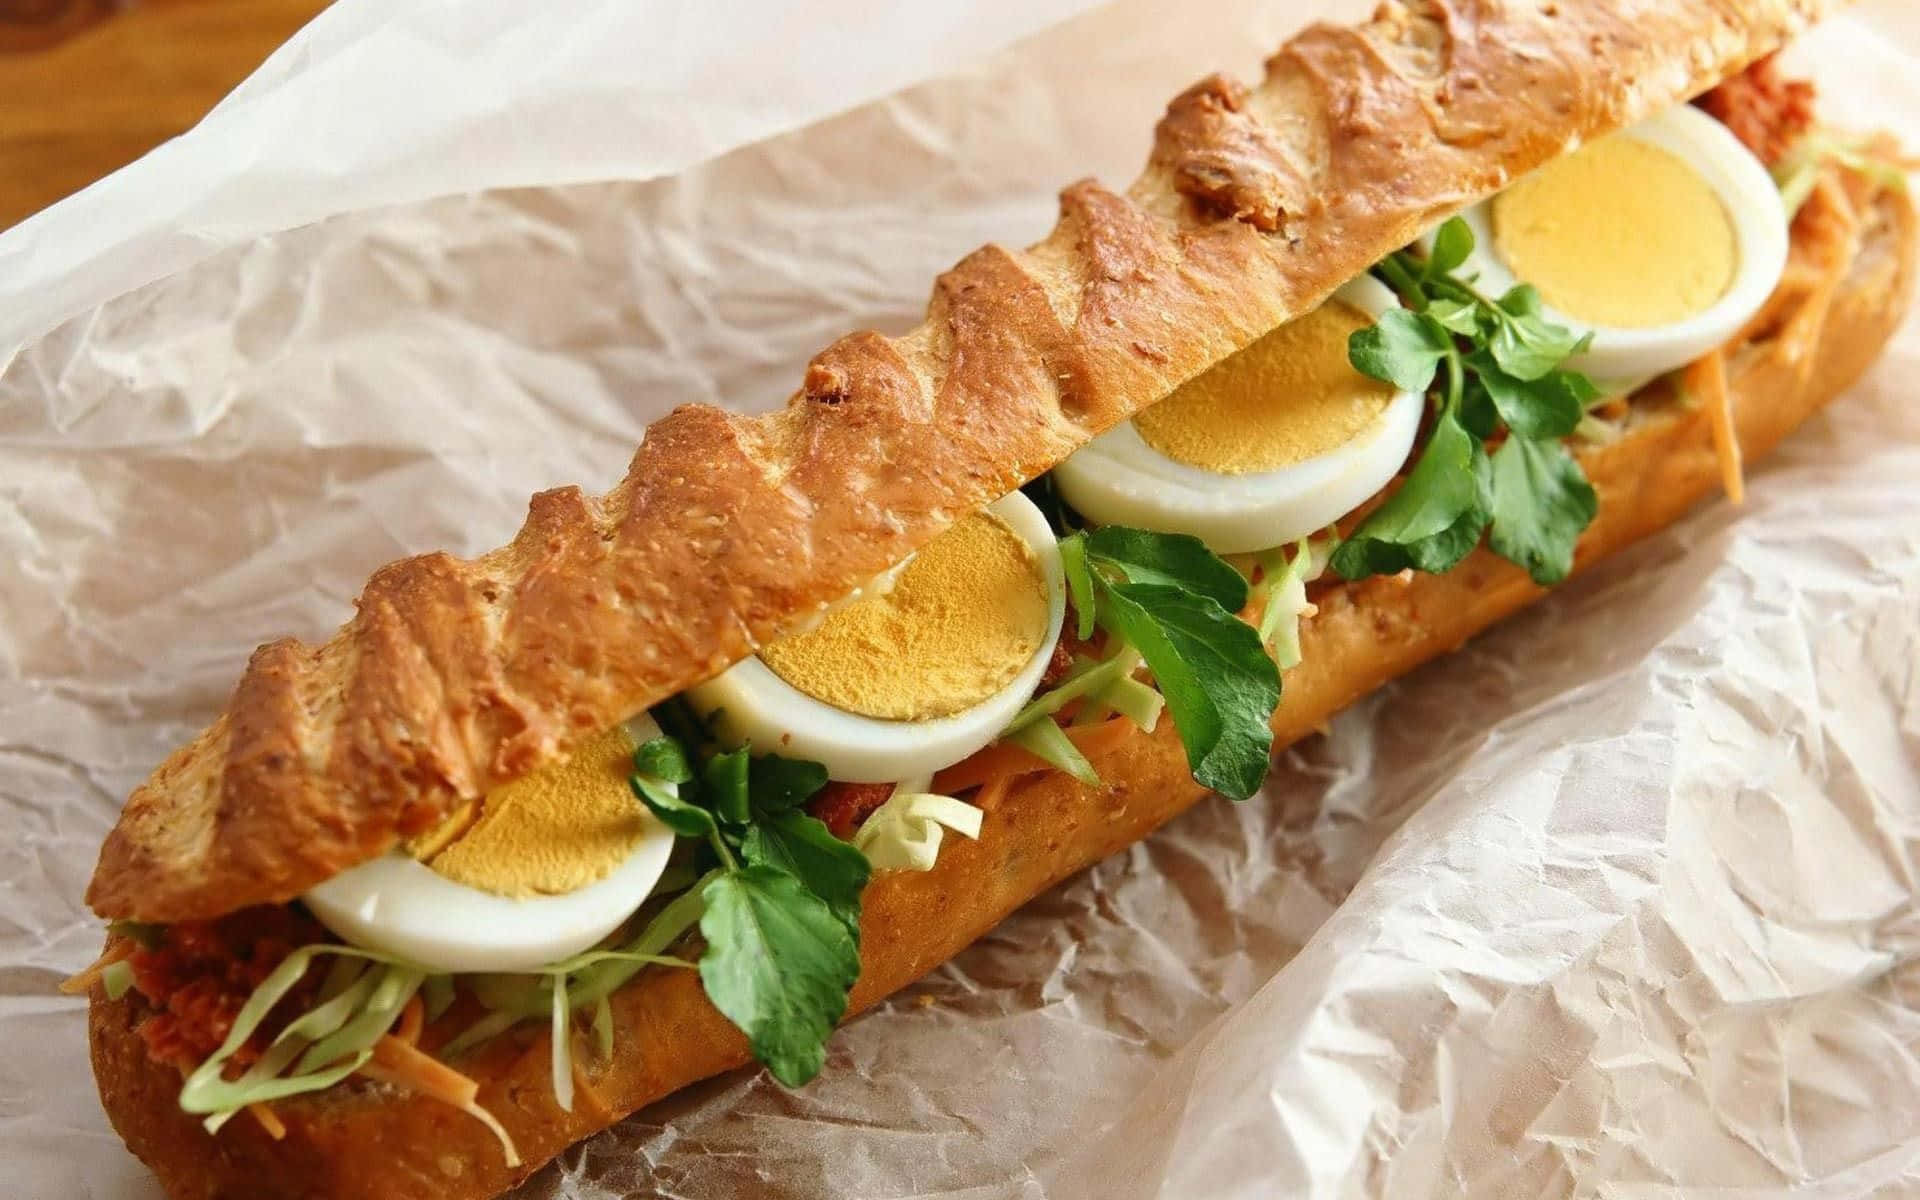 Enjoy a delicious sandwich today